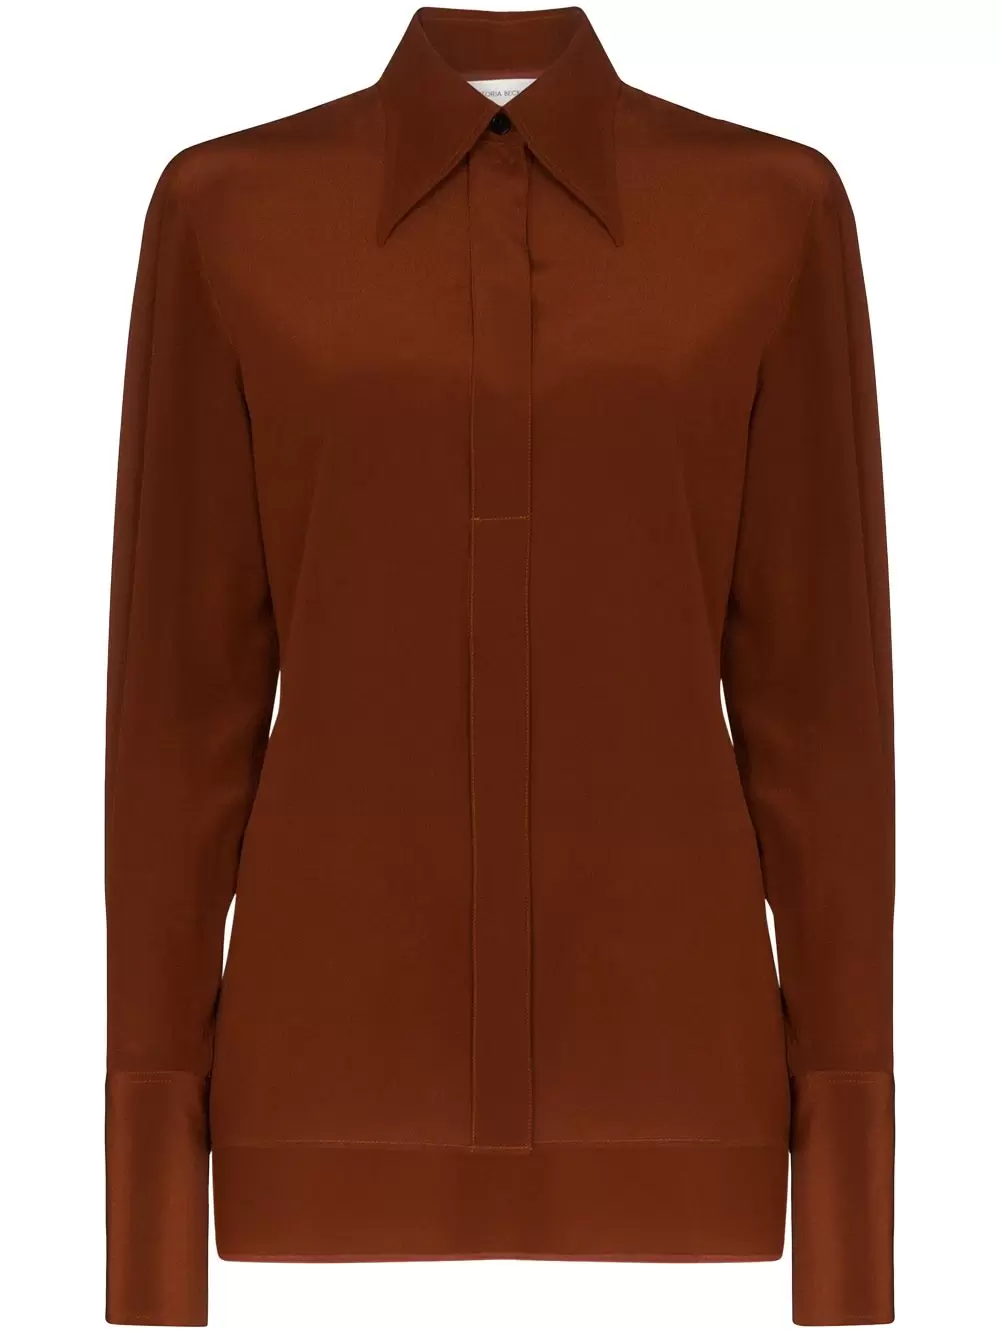 Victoria Beckham brown silk shirt